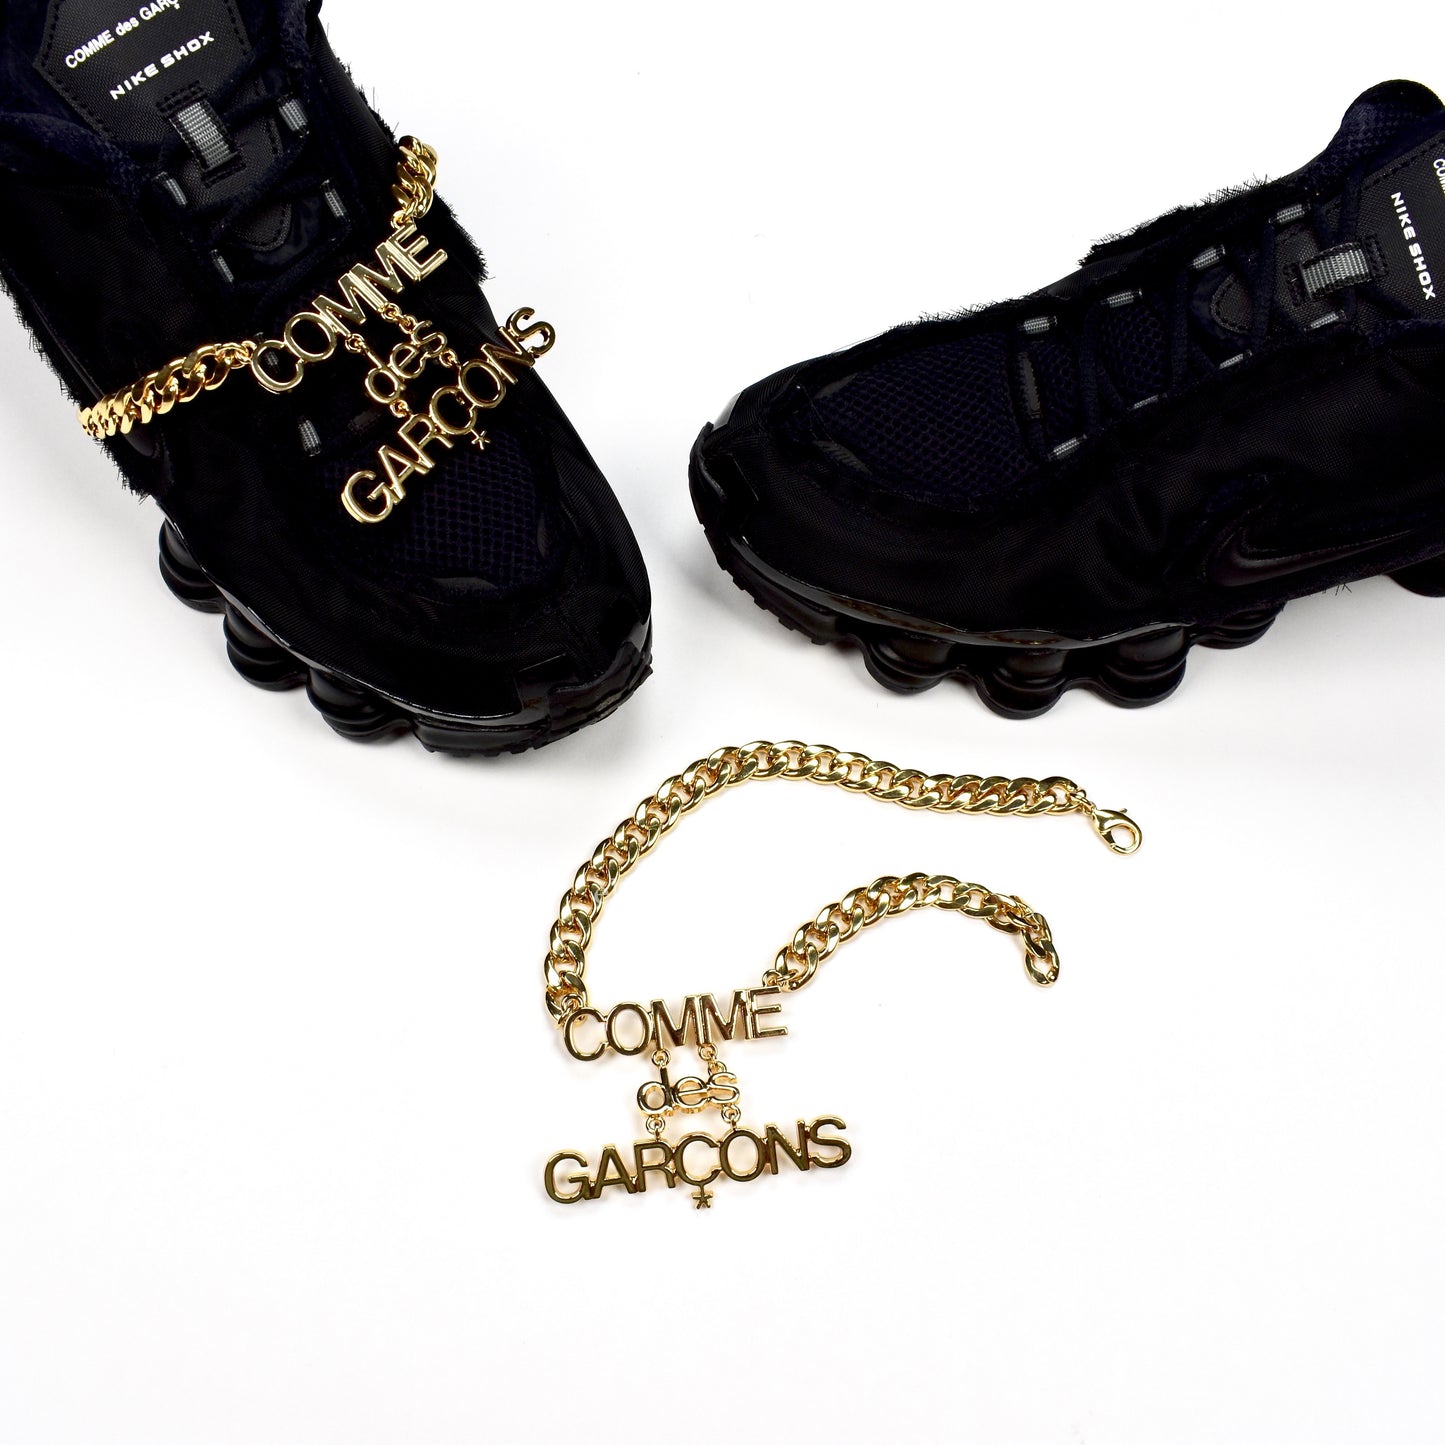 Comme des Garcons x Nike - Shox TL CDG (Black)